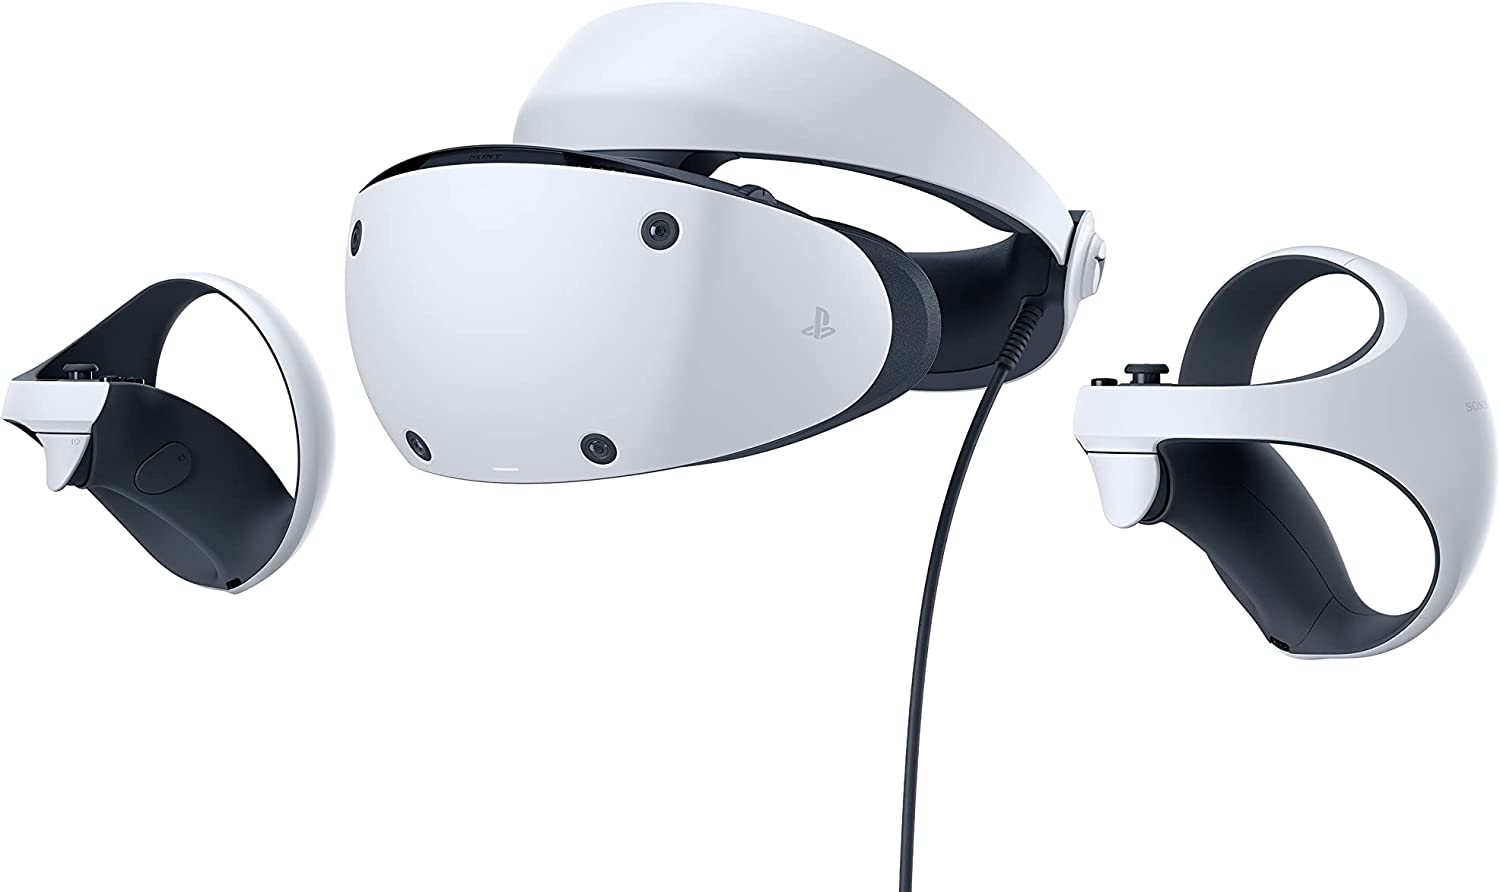 PlayStation VR2 teardown